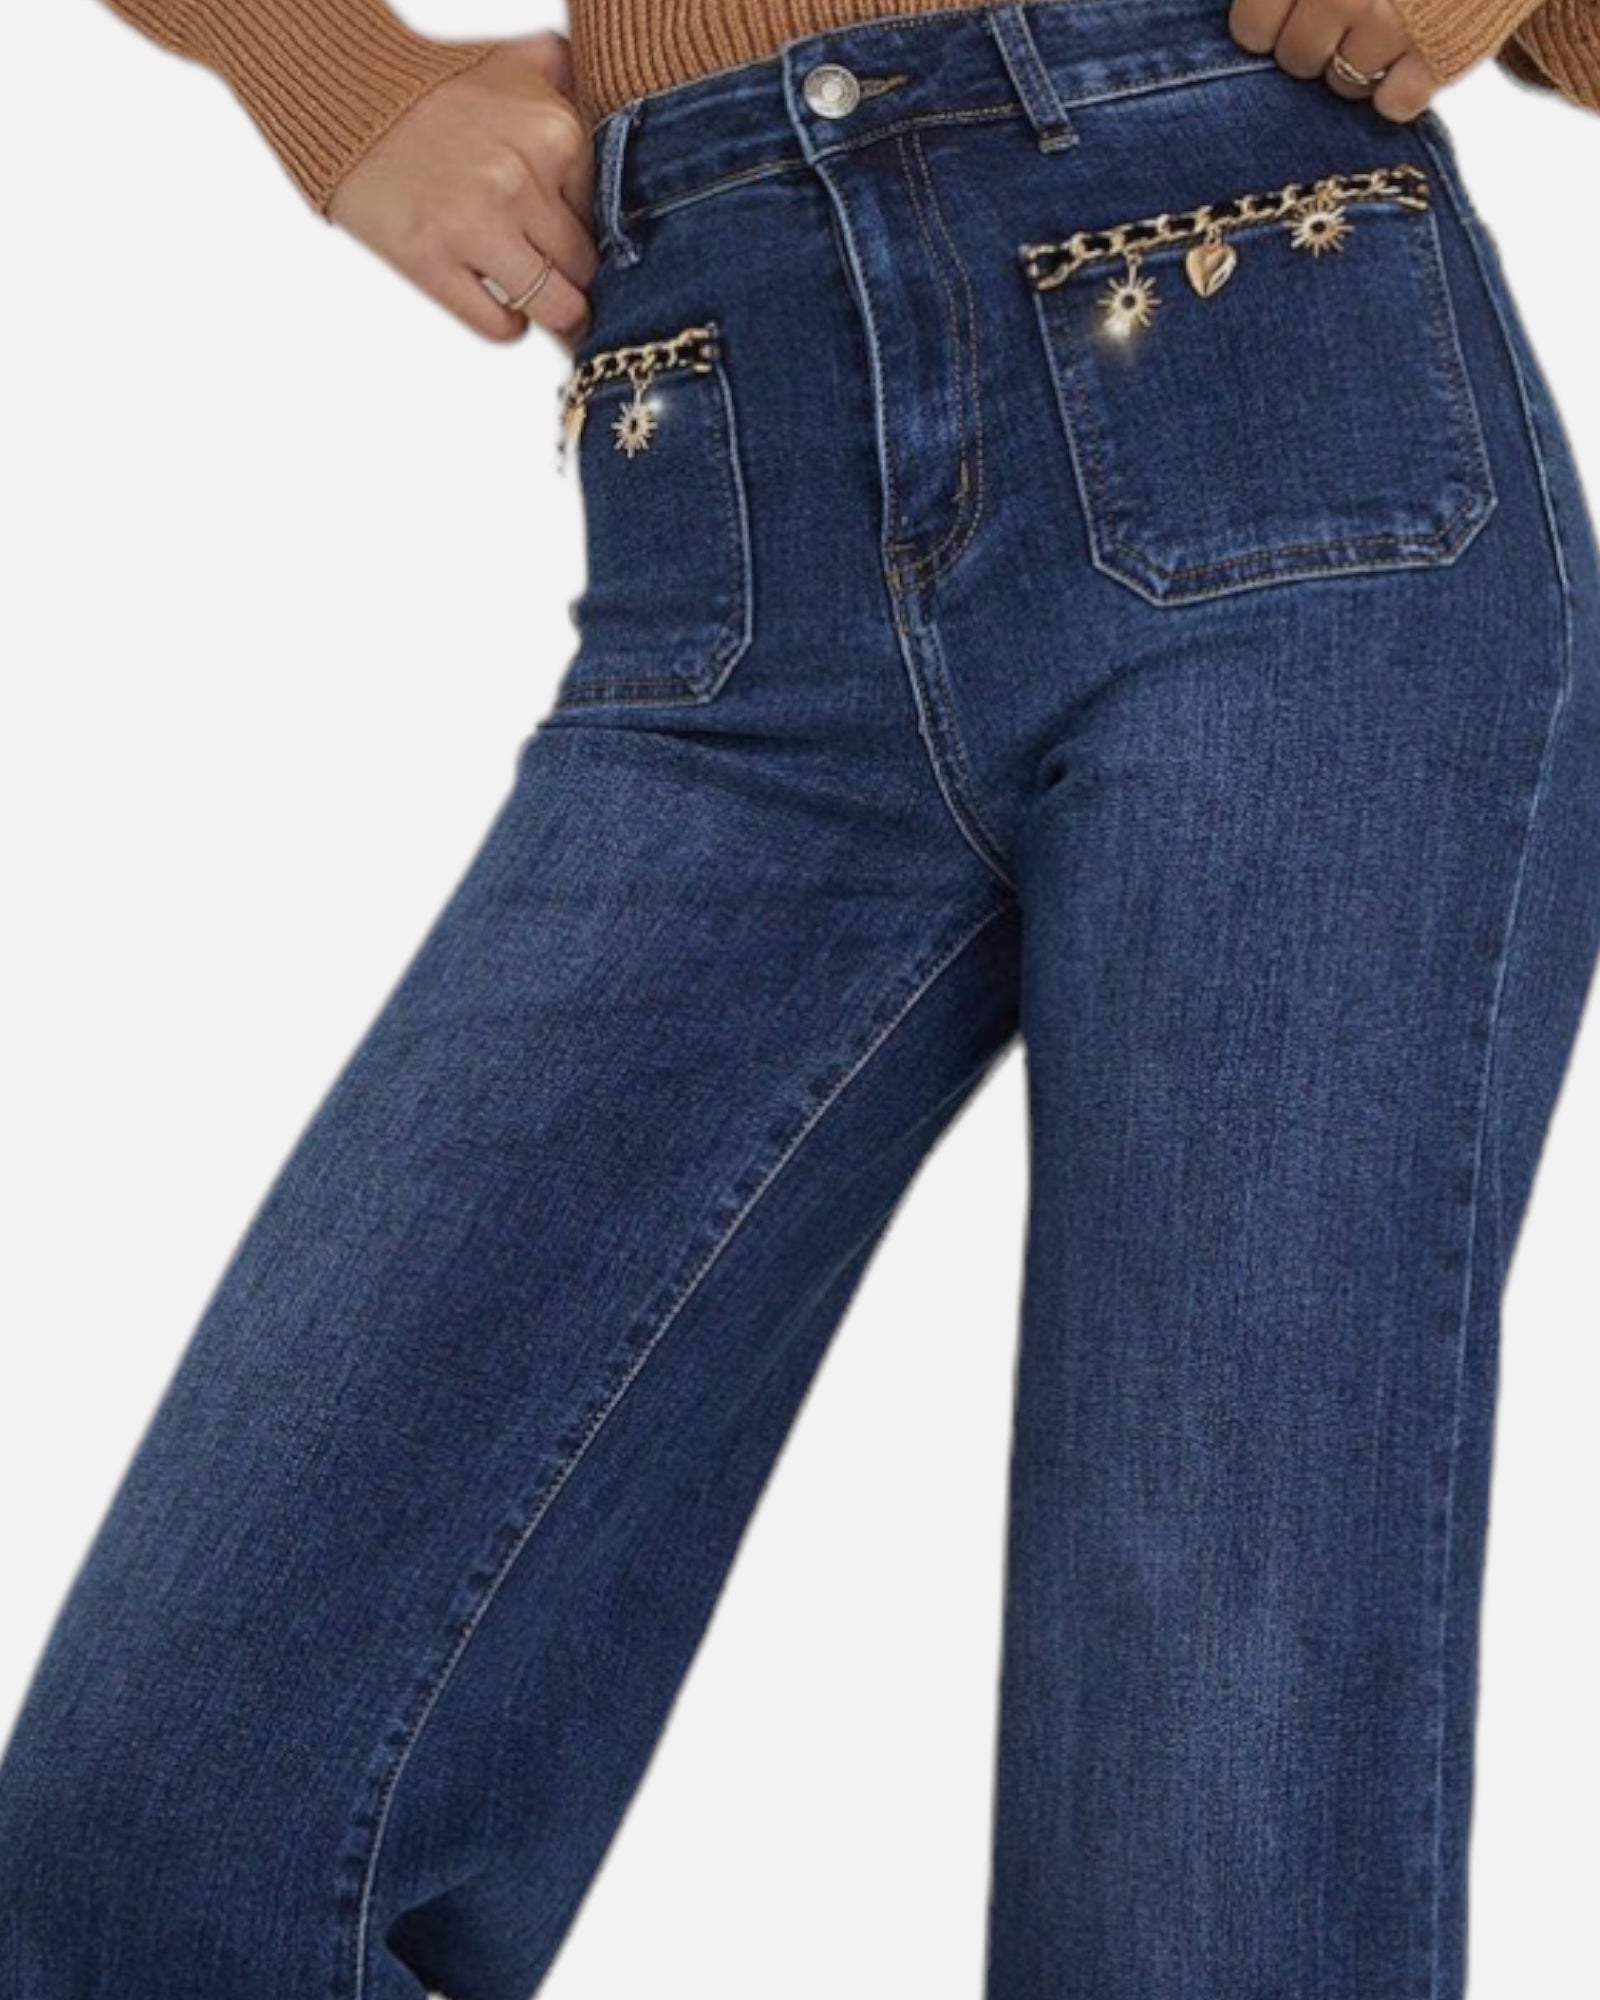 Jeans palazzo charms ciondoli